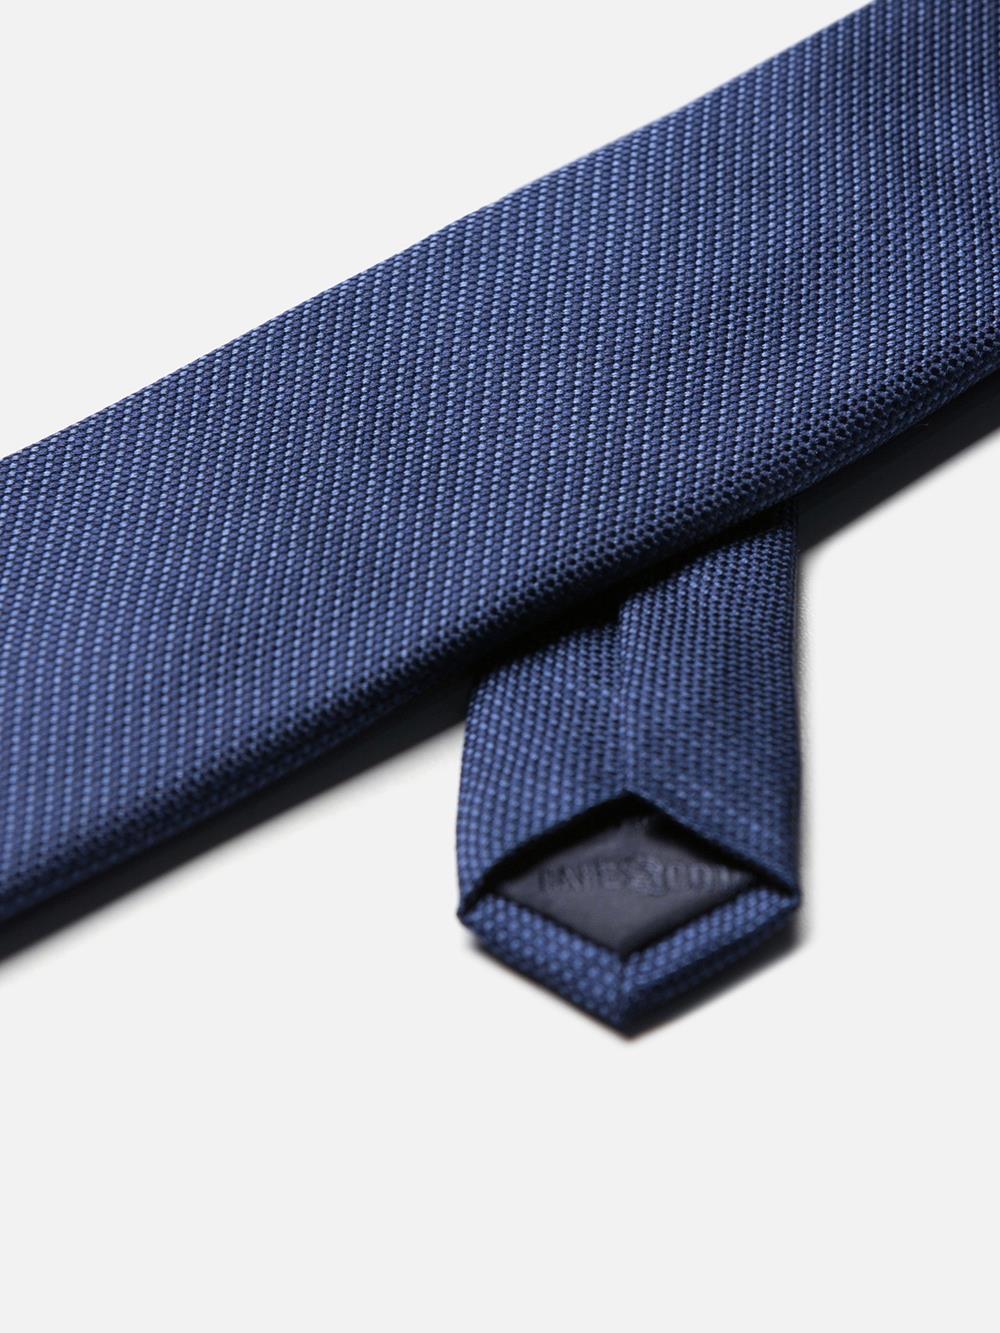 Cravate en soie marine natté bleu